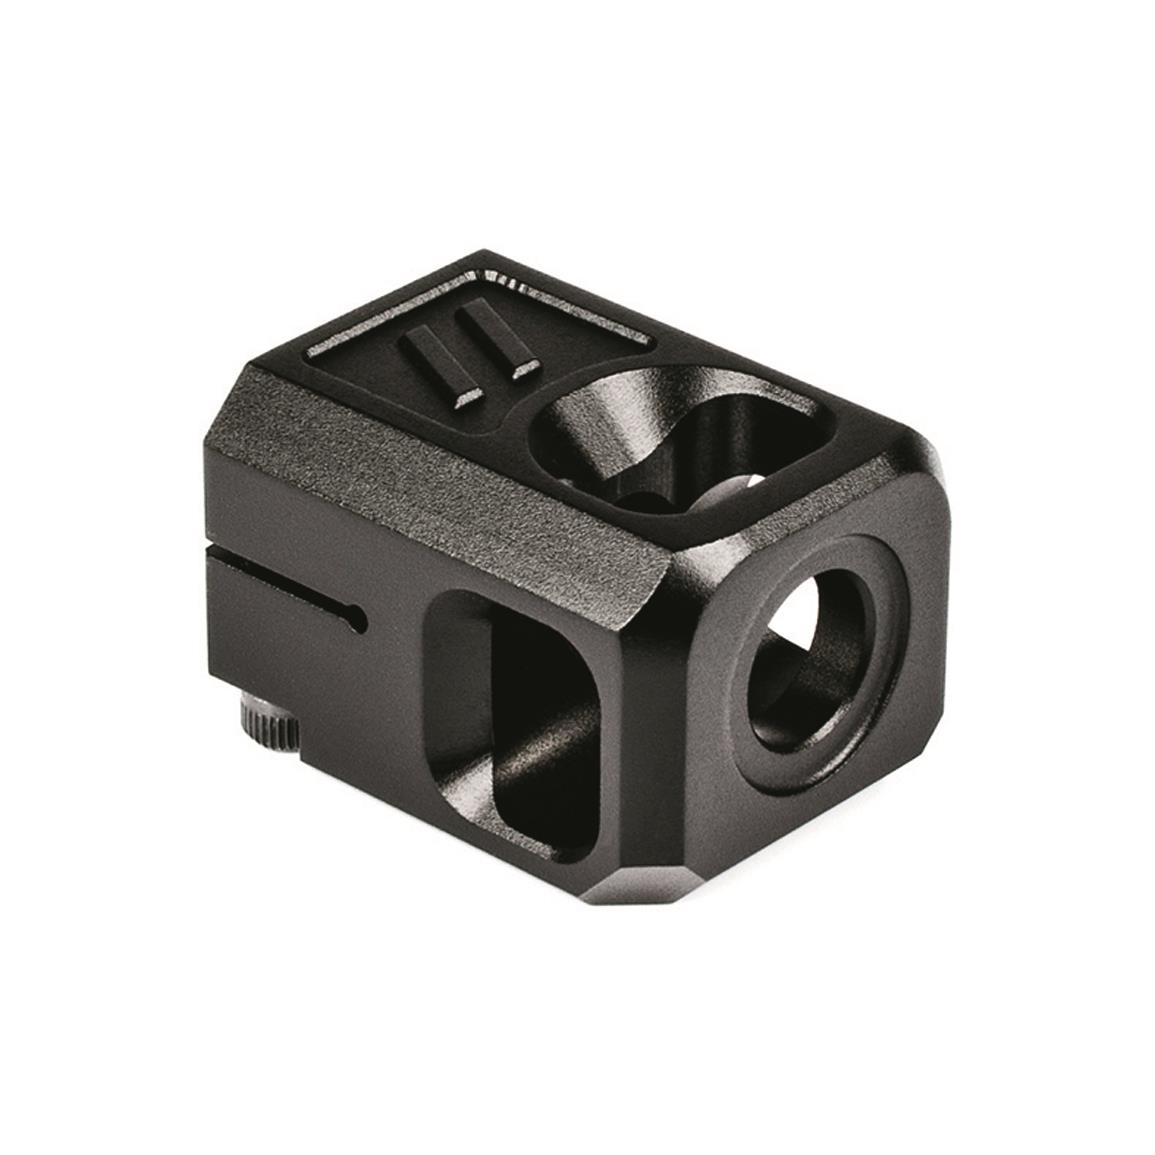 Zev Technologies PRO Compensator V2 for Glock 9mm 17/19/26/34, Fits 13.5x1 LH Thread